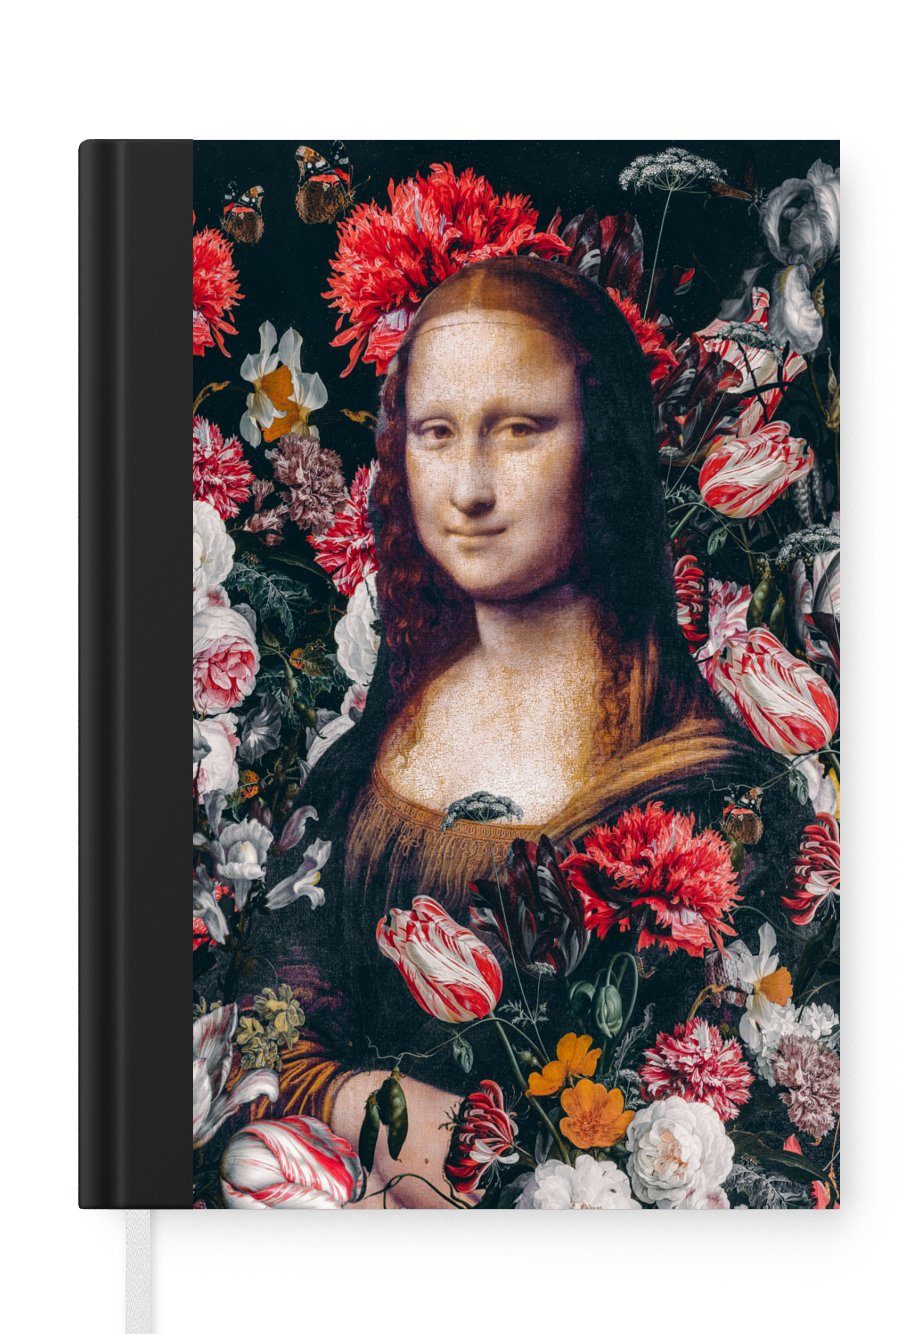 MuchoWow Notizbuch Mona Lisa - Leonardo da Vinci - Blumen - Rosa, Journal, Merkzettel, Tagebuch, Notizheft, A5, 98 Seiten, Haushaltsbuch